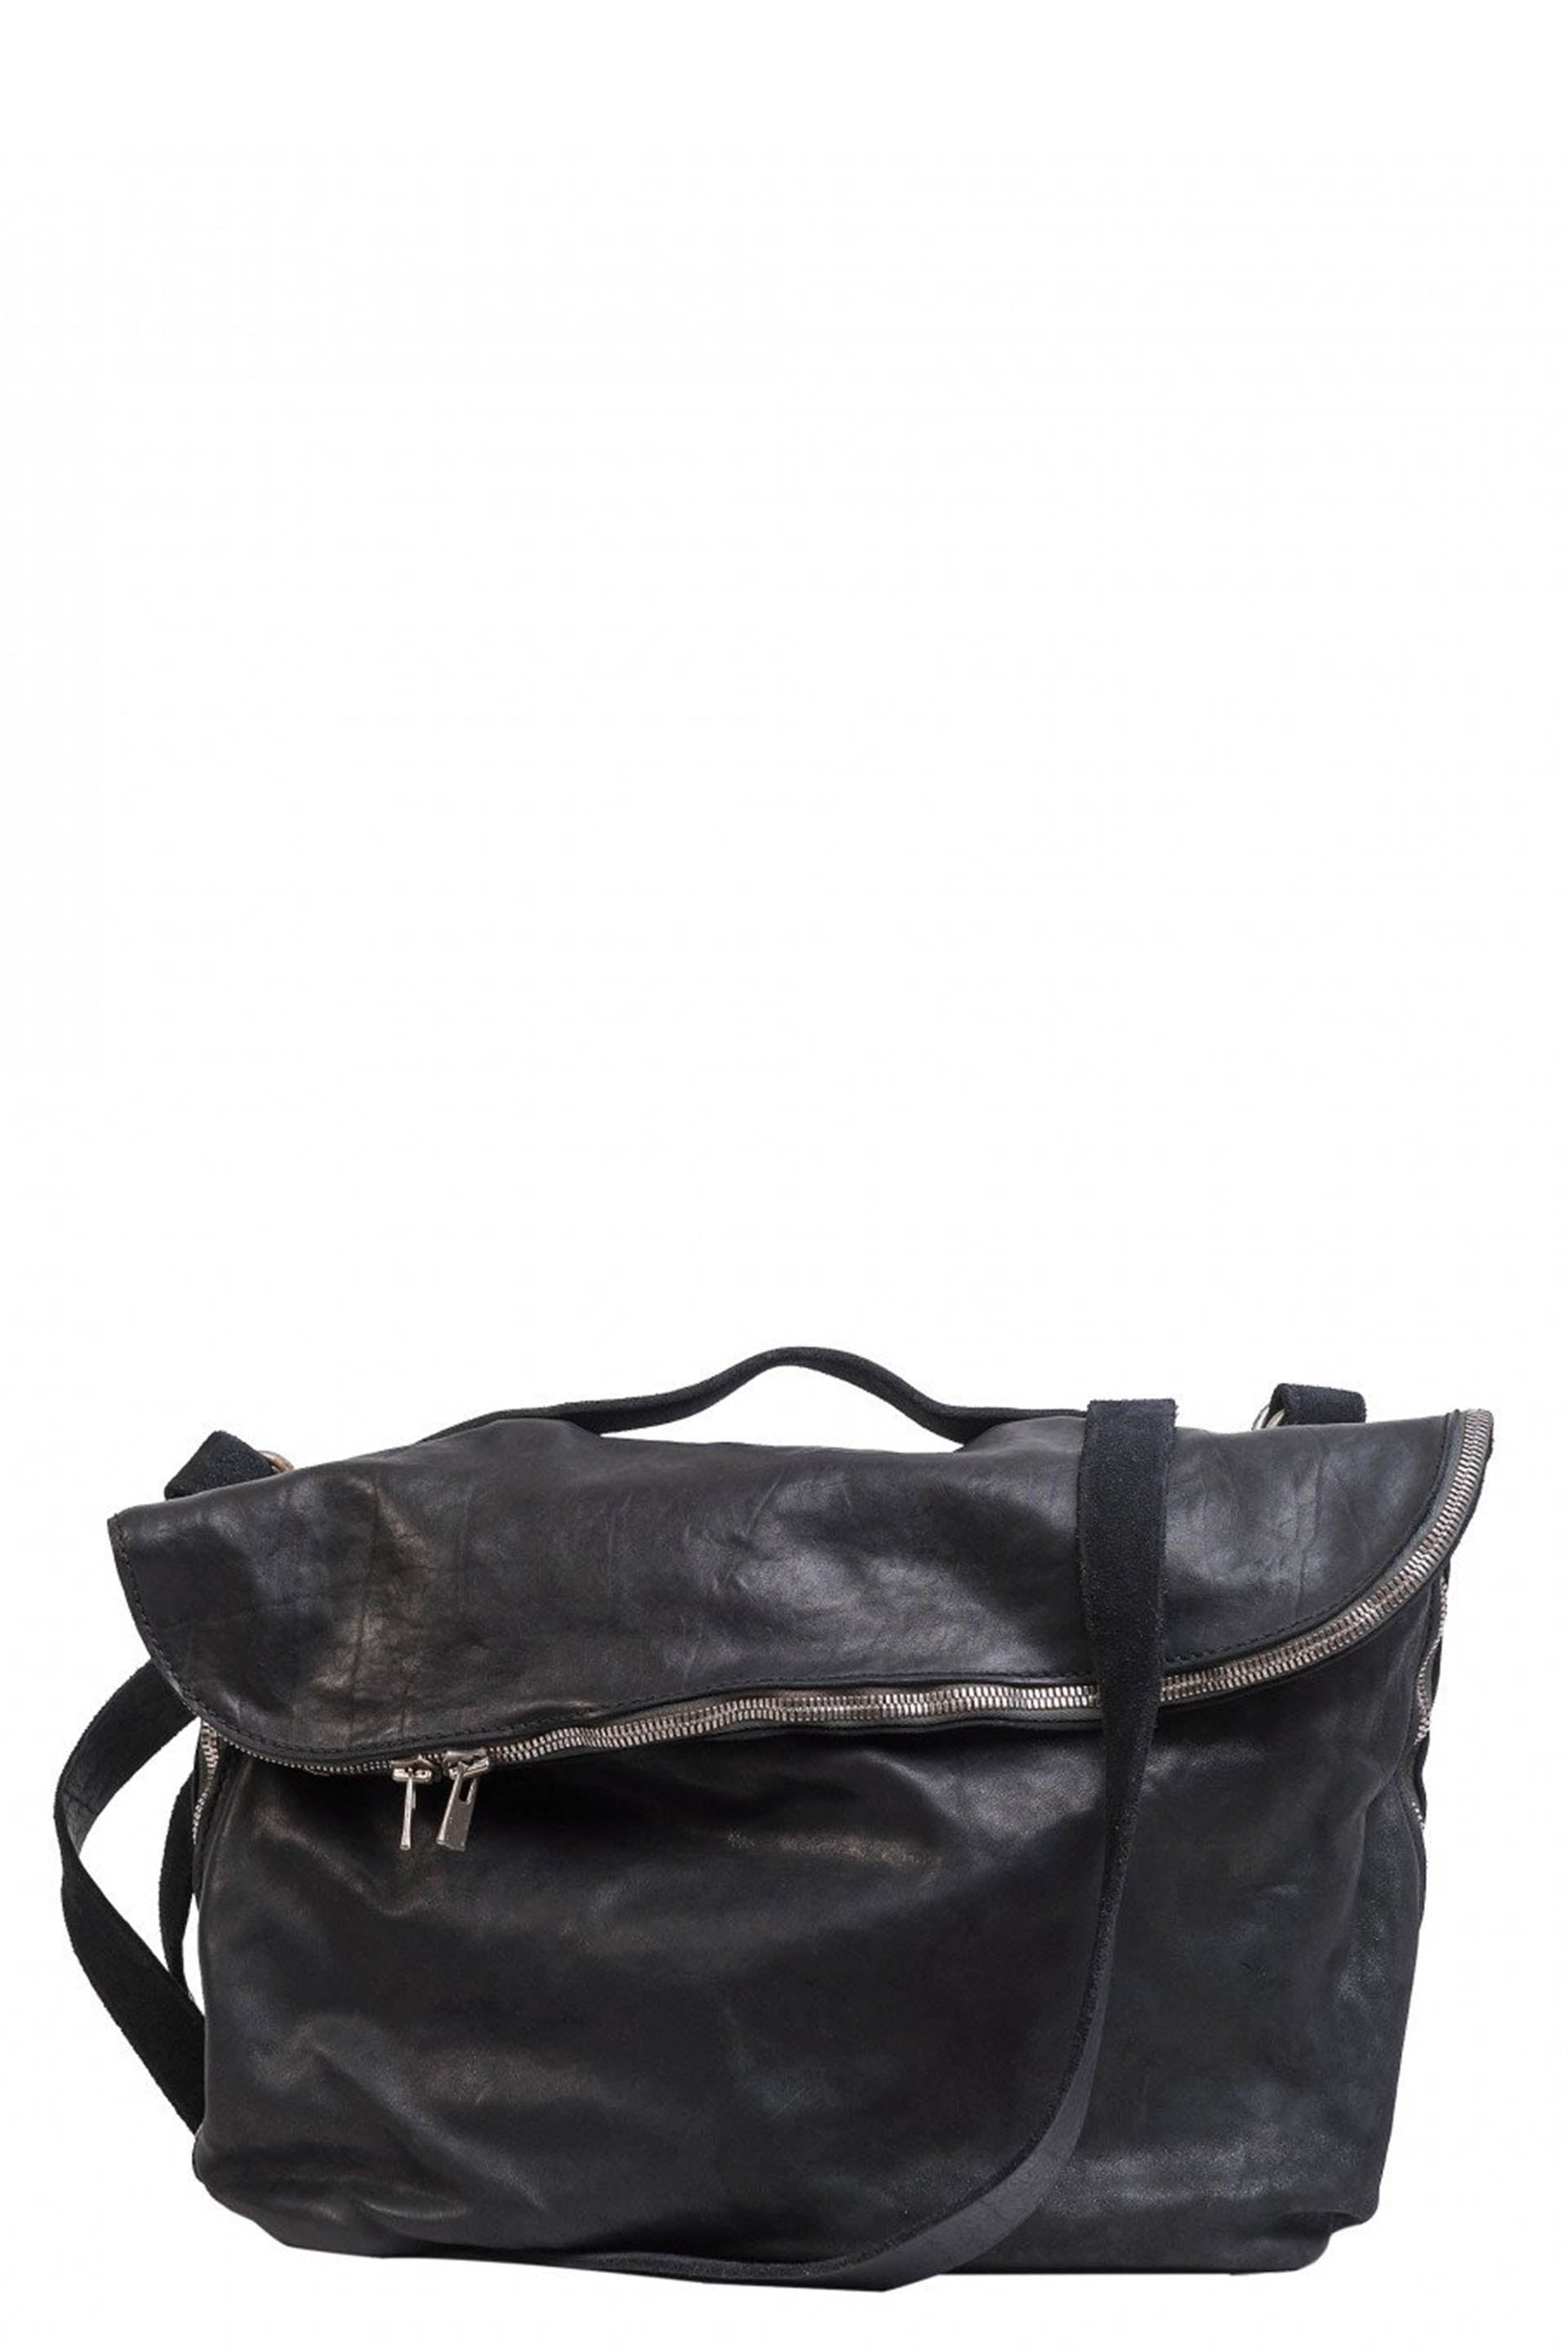 Guidi M10 bag - Horse Leather Messenger Bag | UJNG